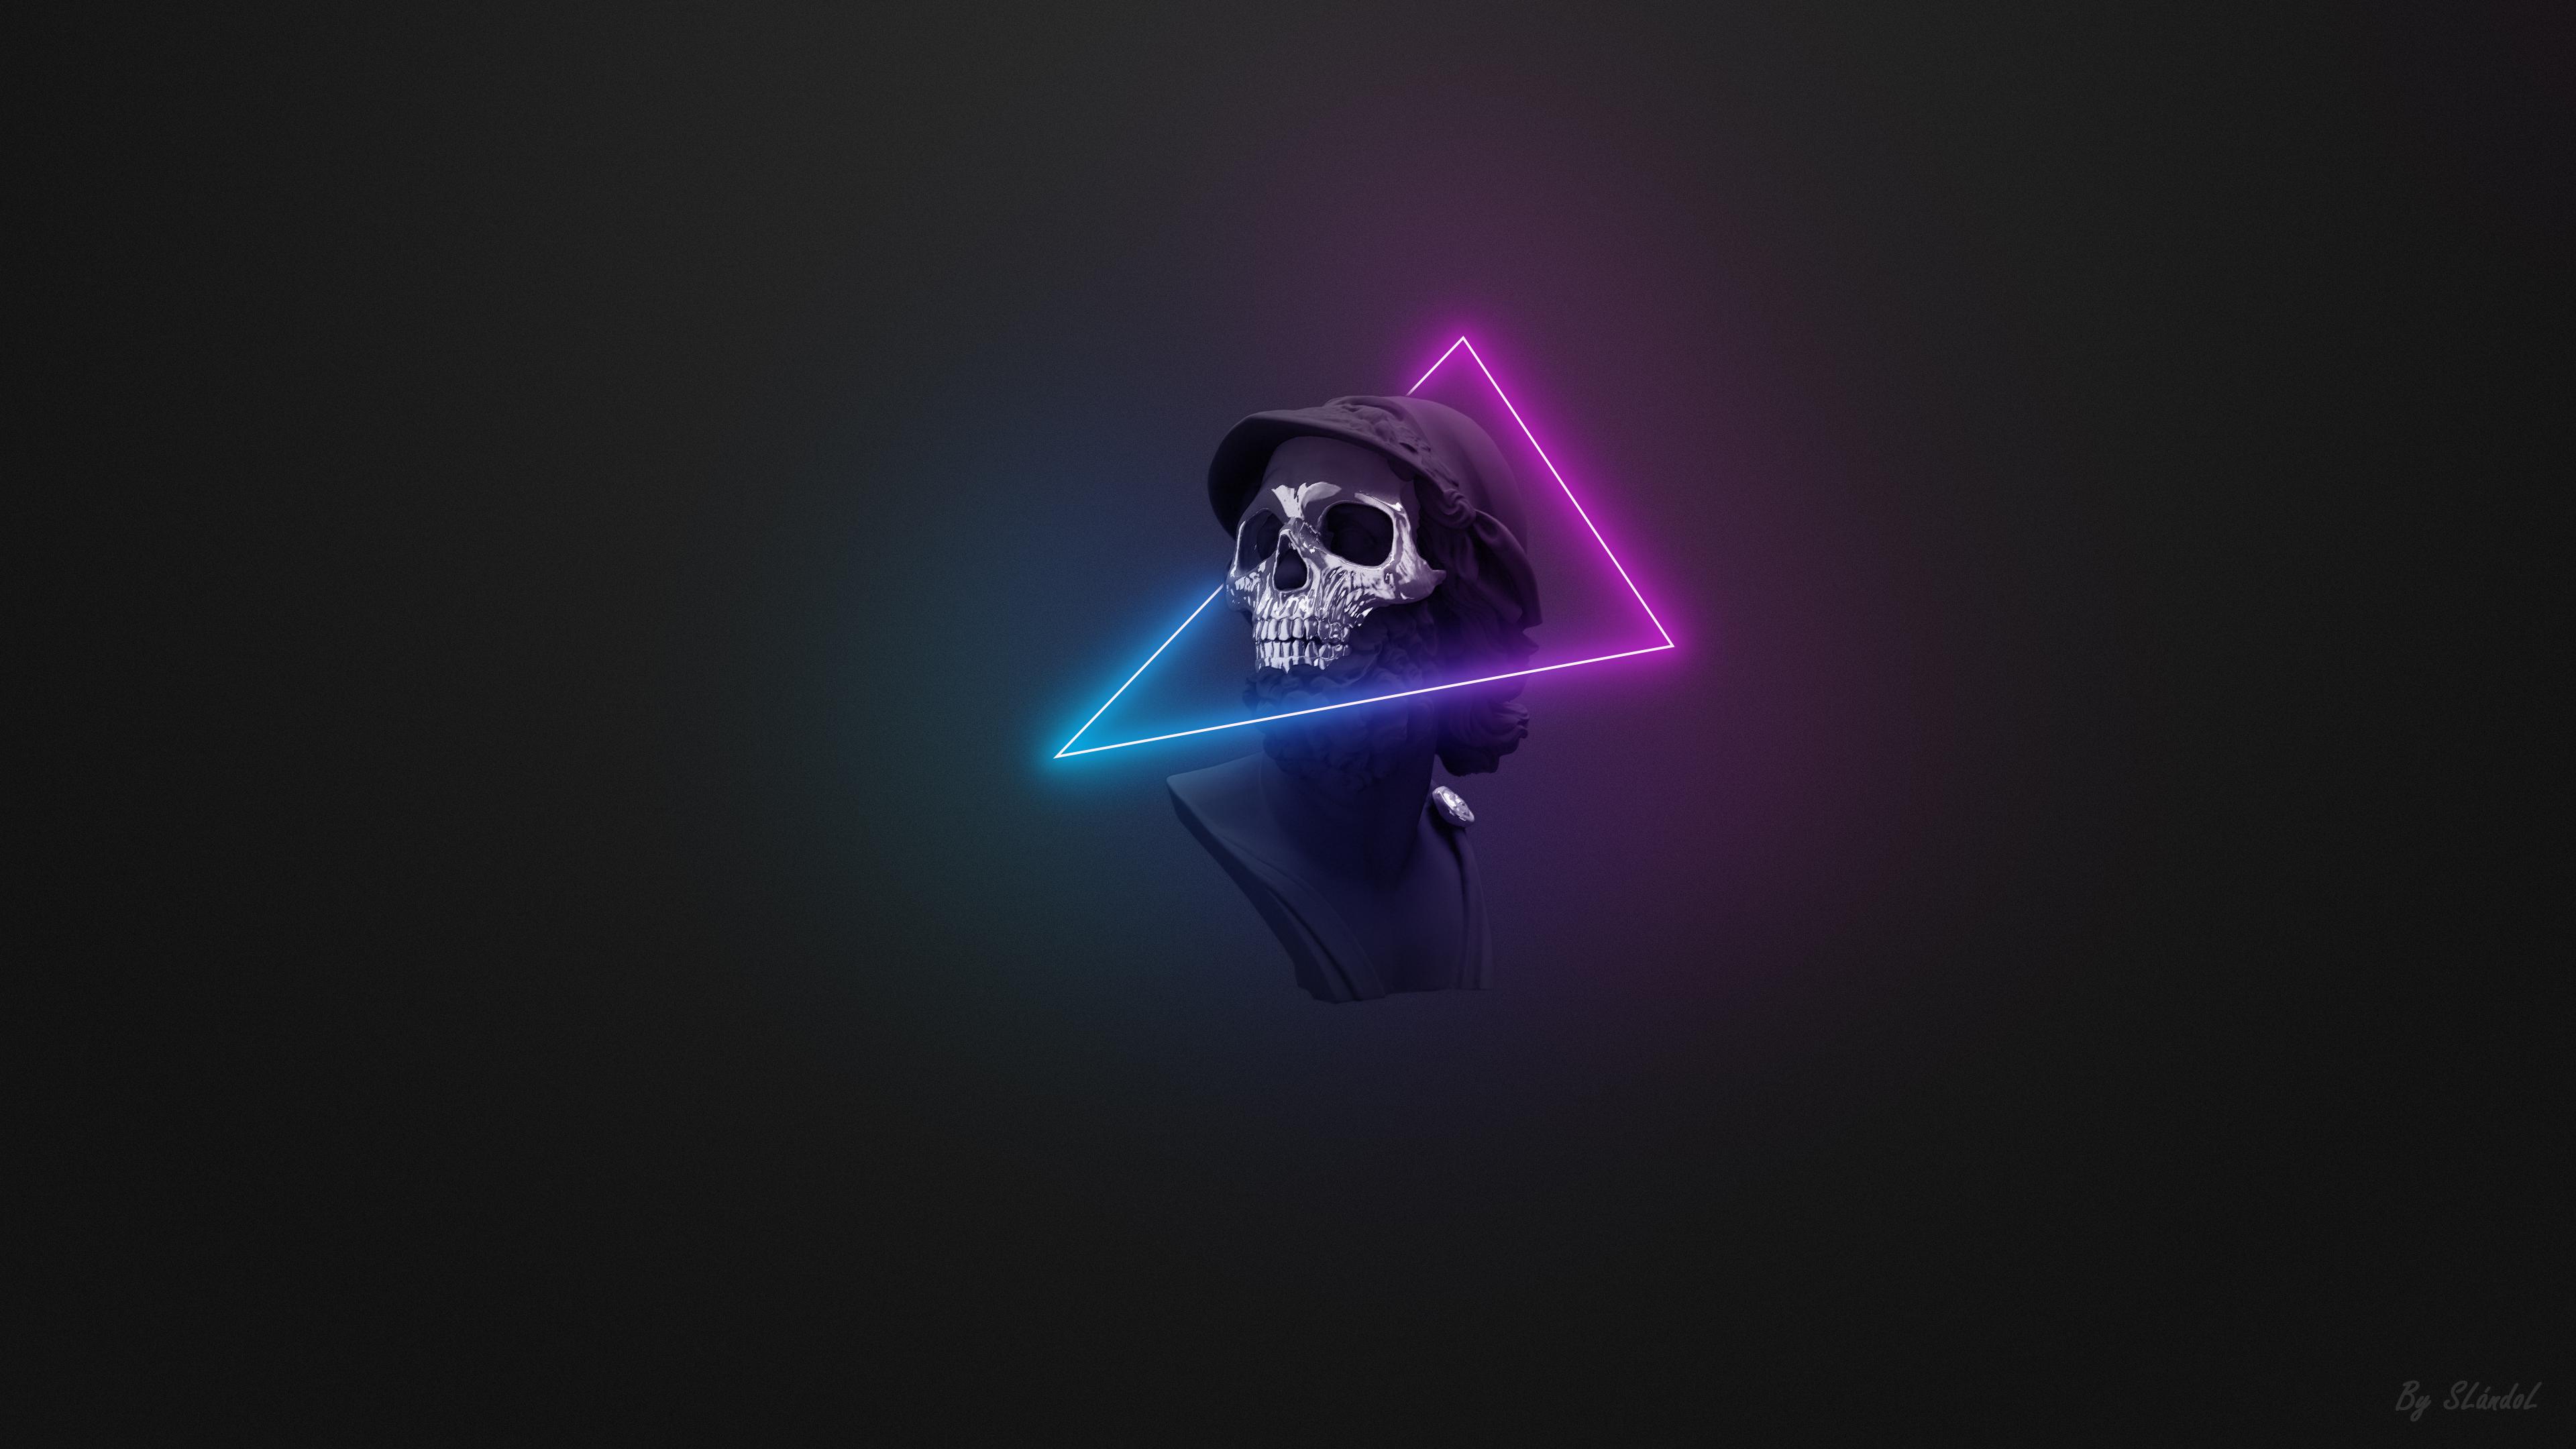 General 3840x2160 triangle neon minimalism digital art skull glowing simple background watermarked